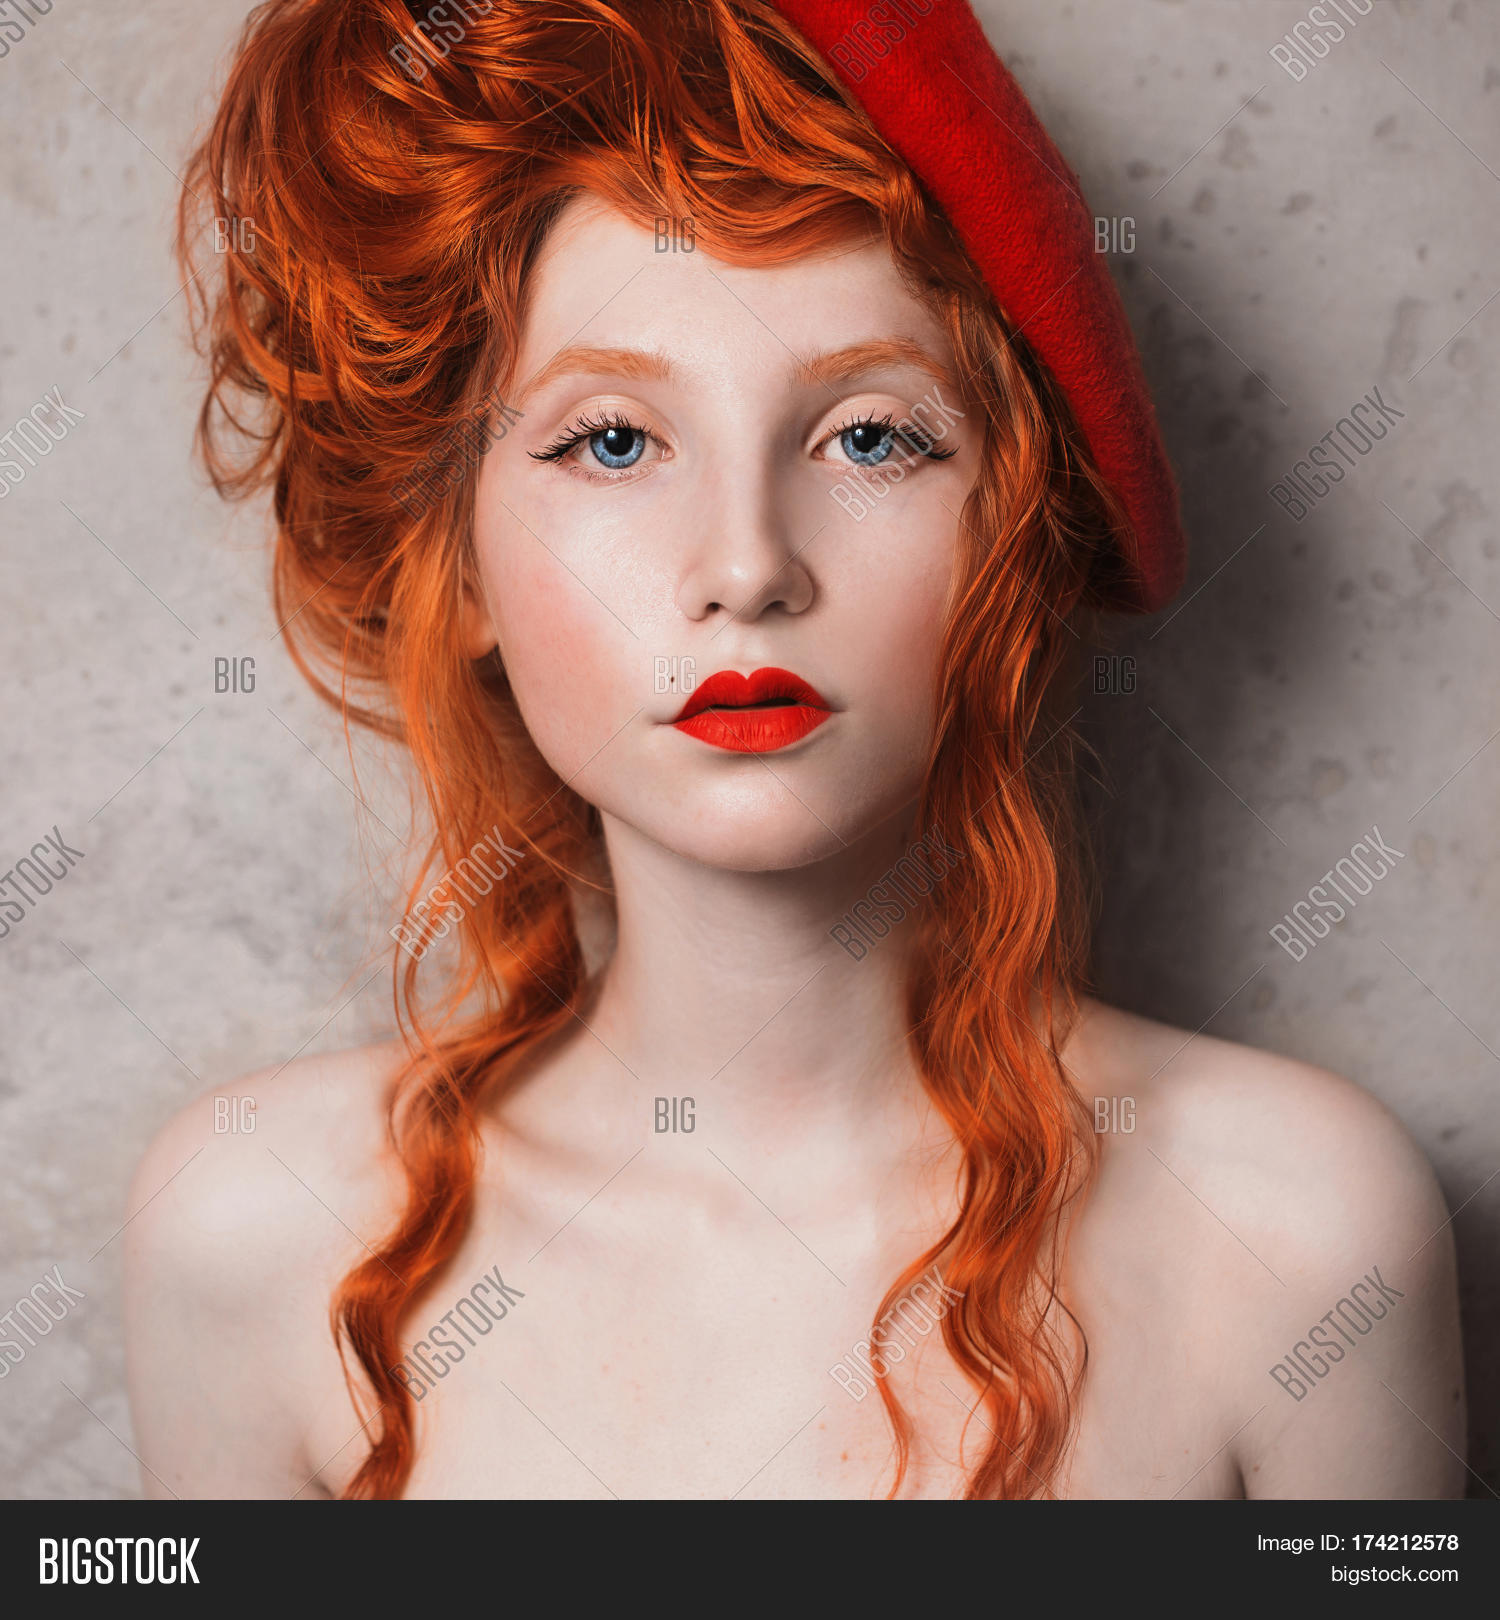 Vintage Woman Red Hair Image & Photo (Free Trial) | Bigstock